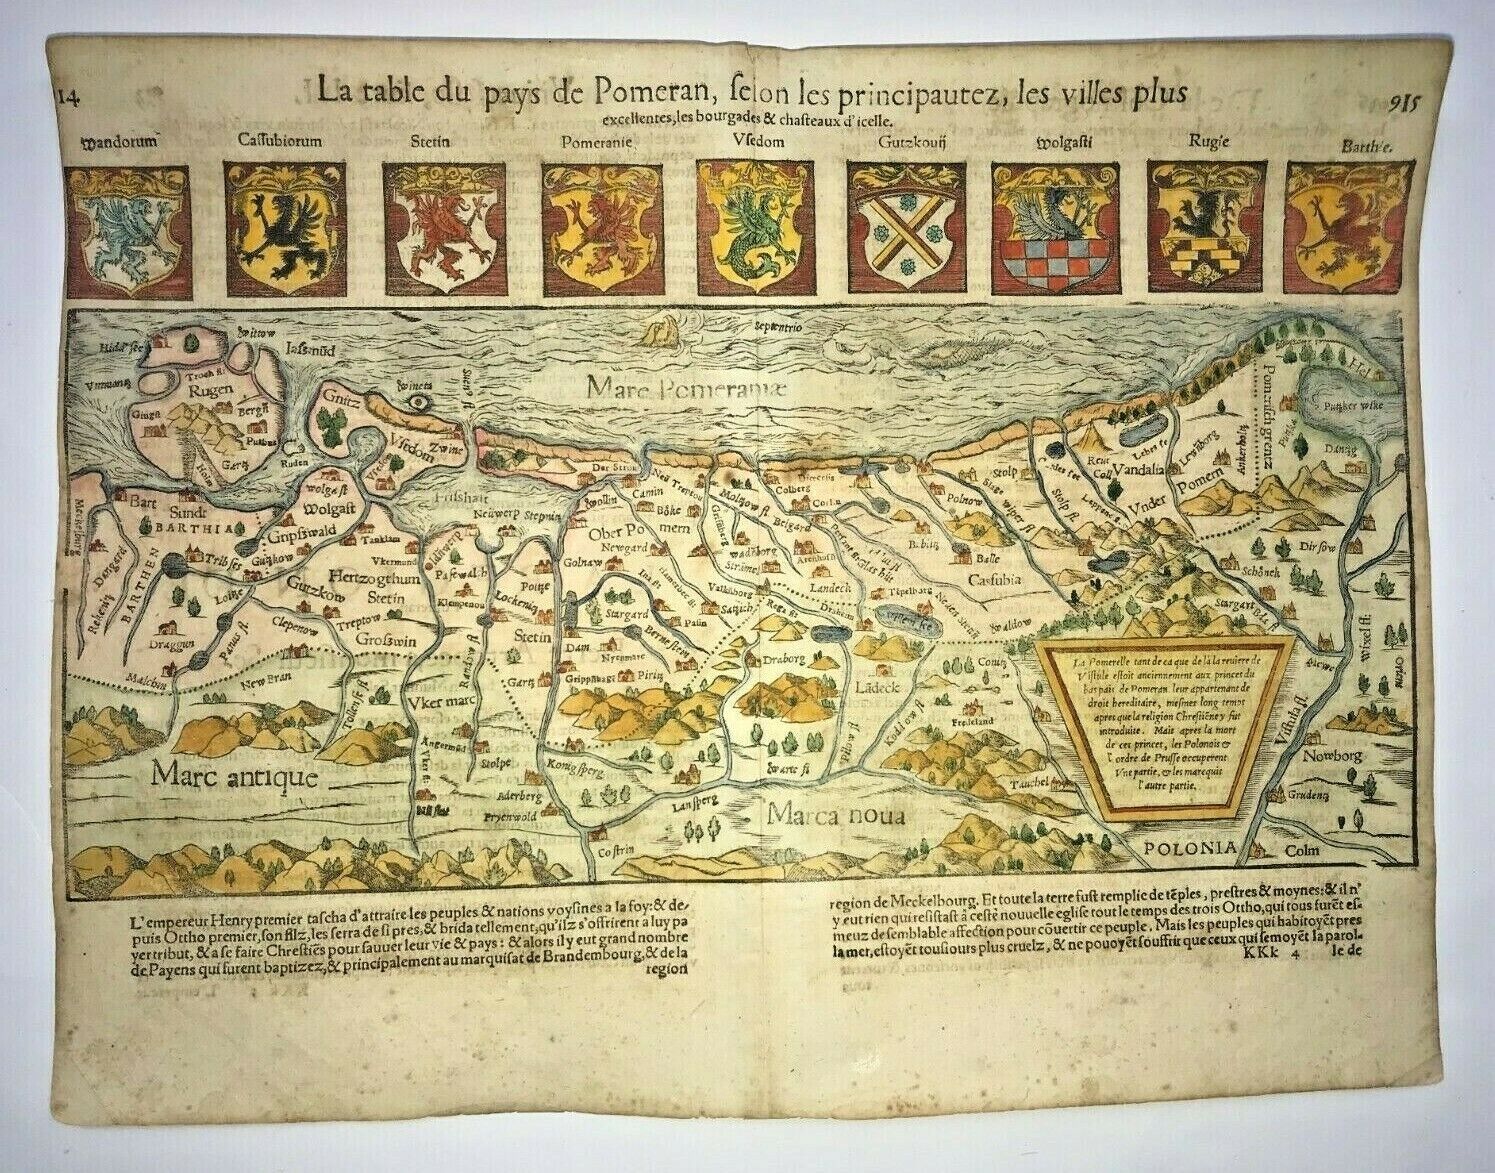 POLAND POMERANIA 1568 SEBASTIAN MUNSTER LARGE UNUSUAL ANTIQUE MAP 16TH CENTURY